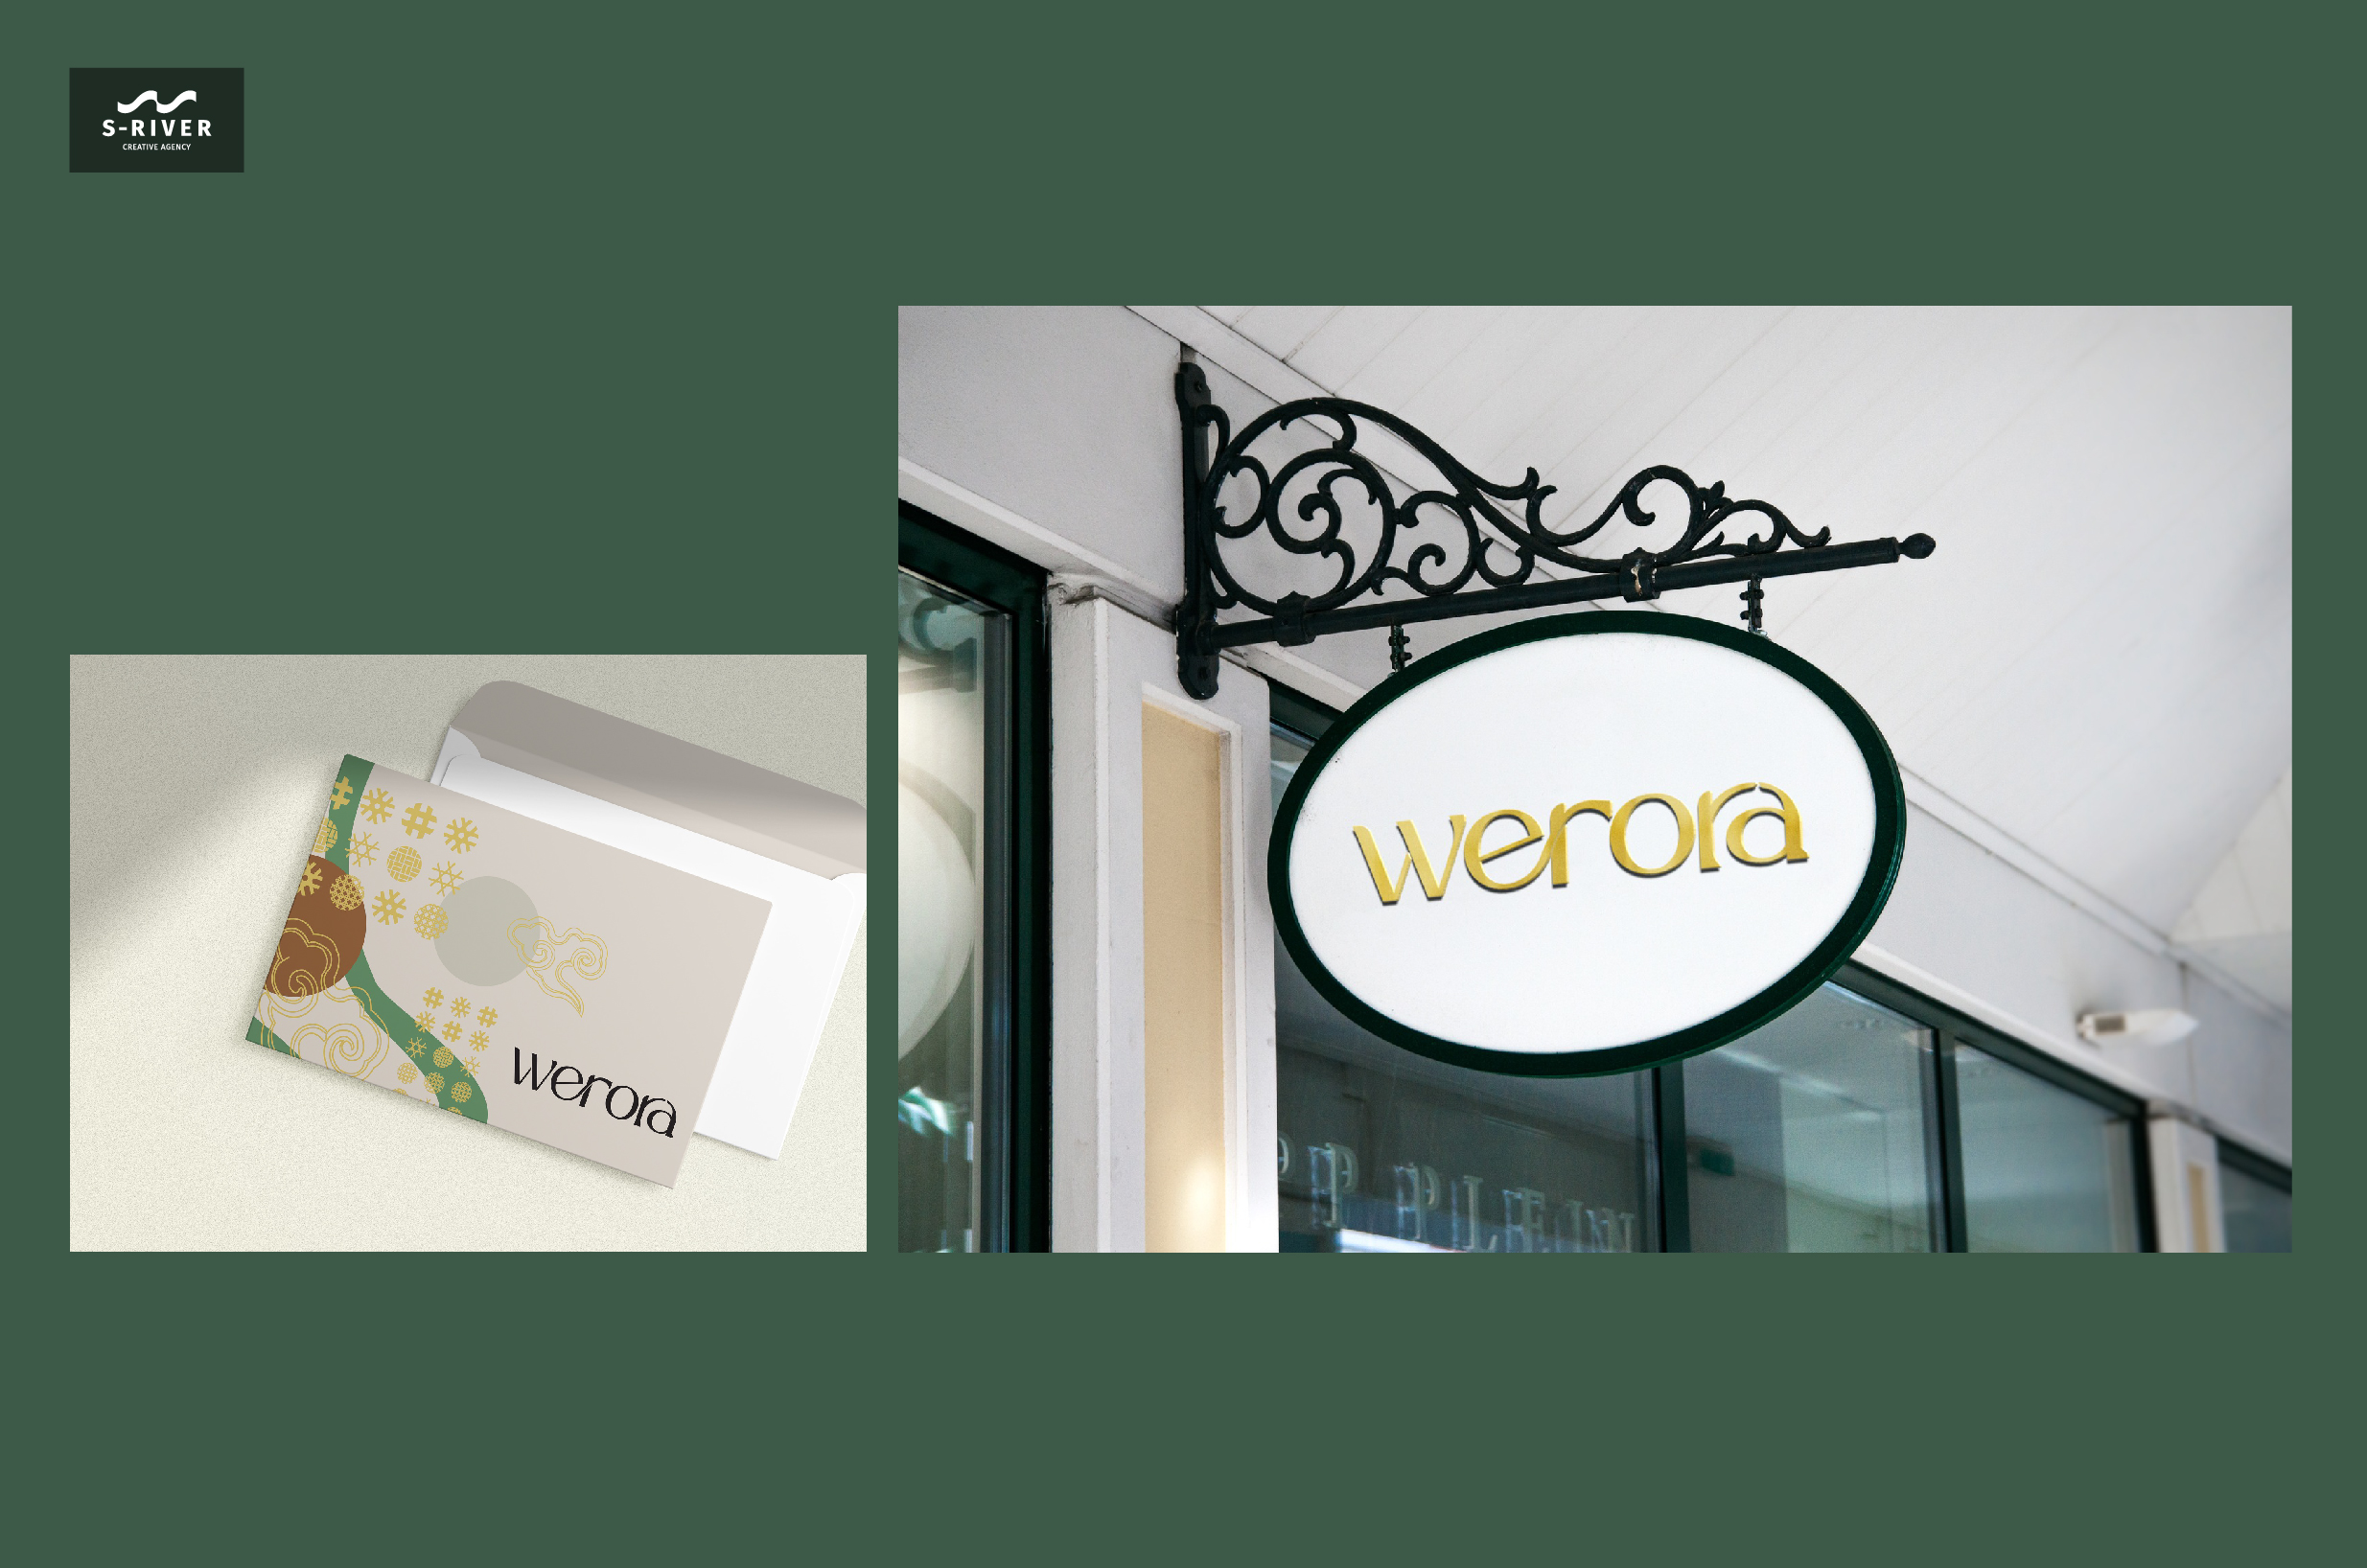 werora-logo-design-sriver